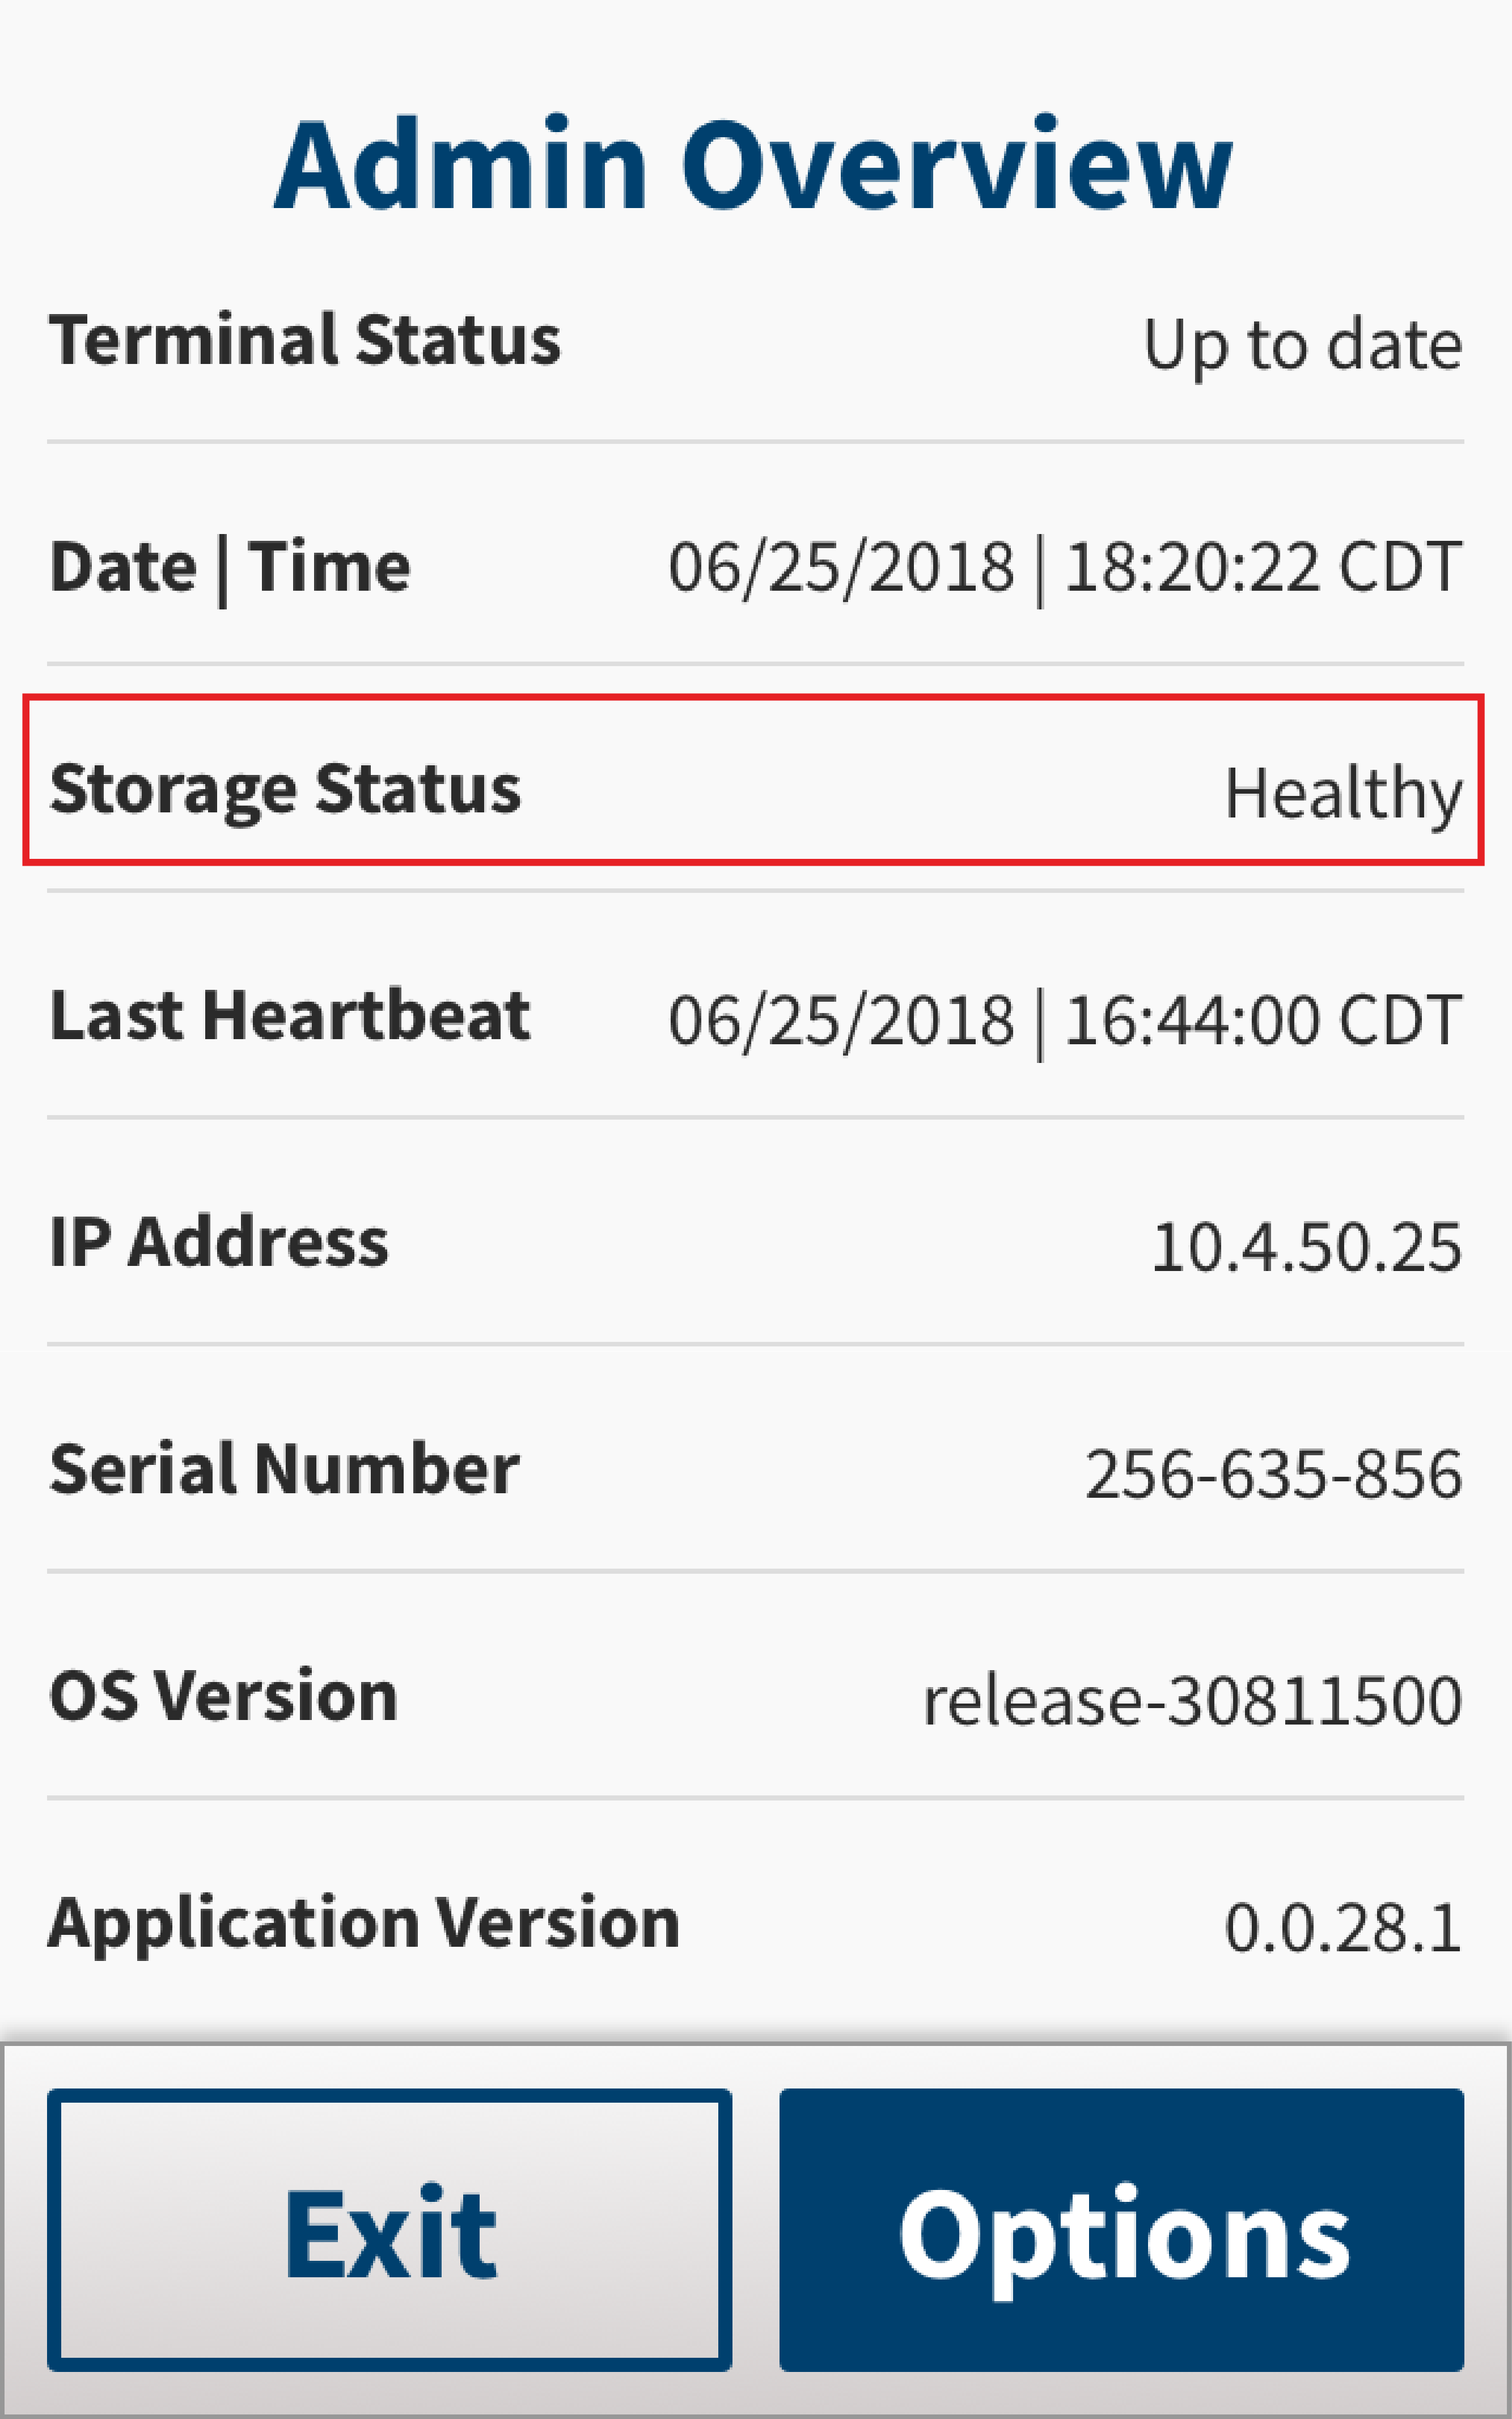 Admin screen showing the Storage Status